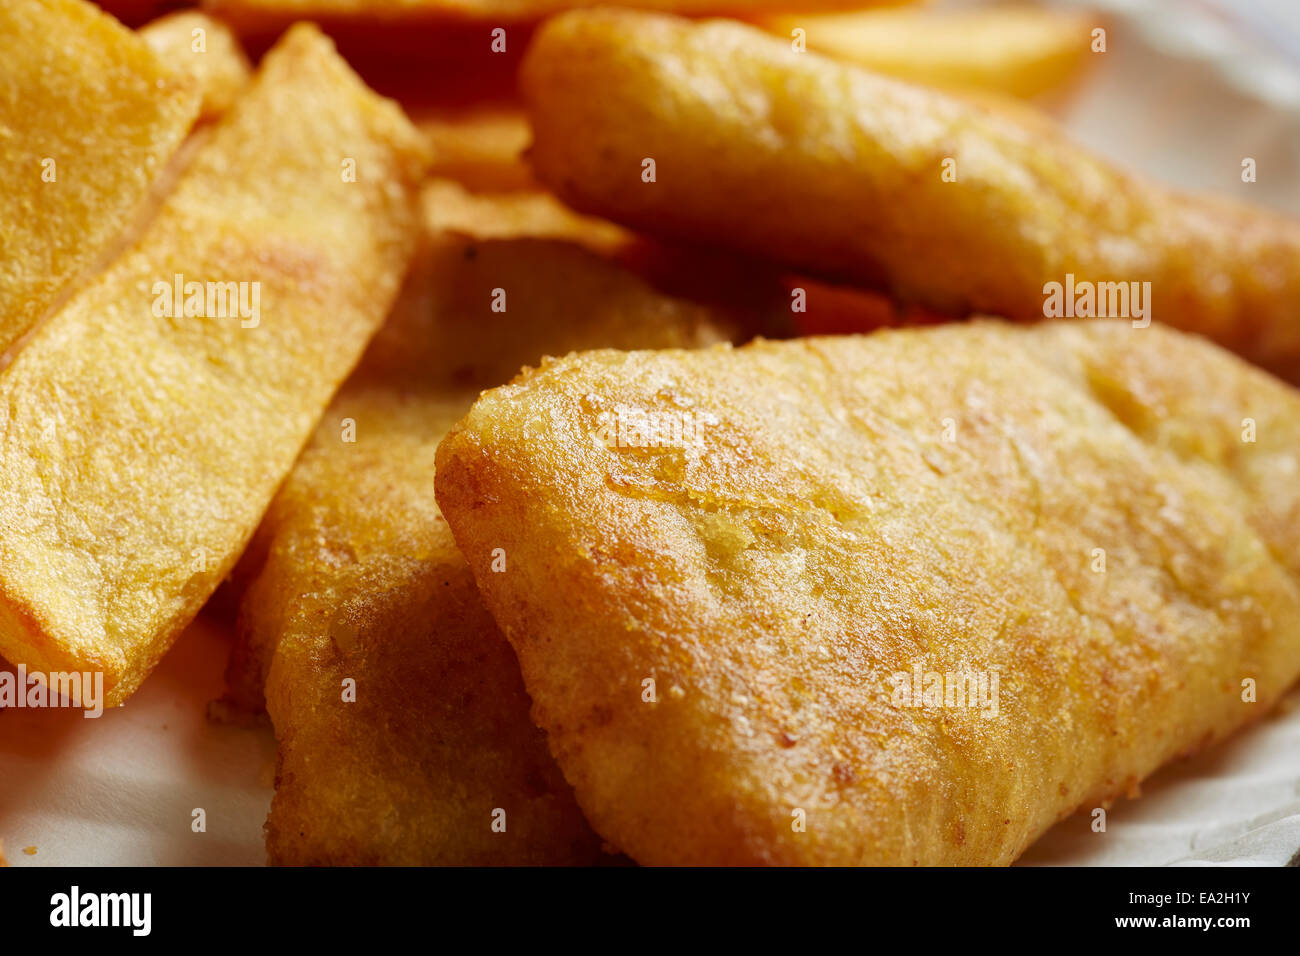 Fish &amp; chips Stockfotografie - Alamy